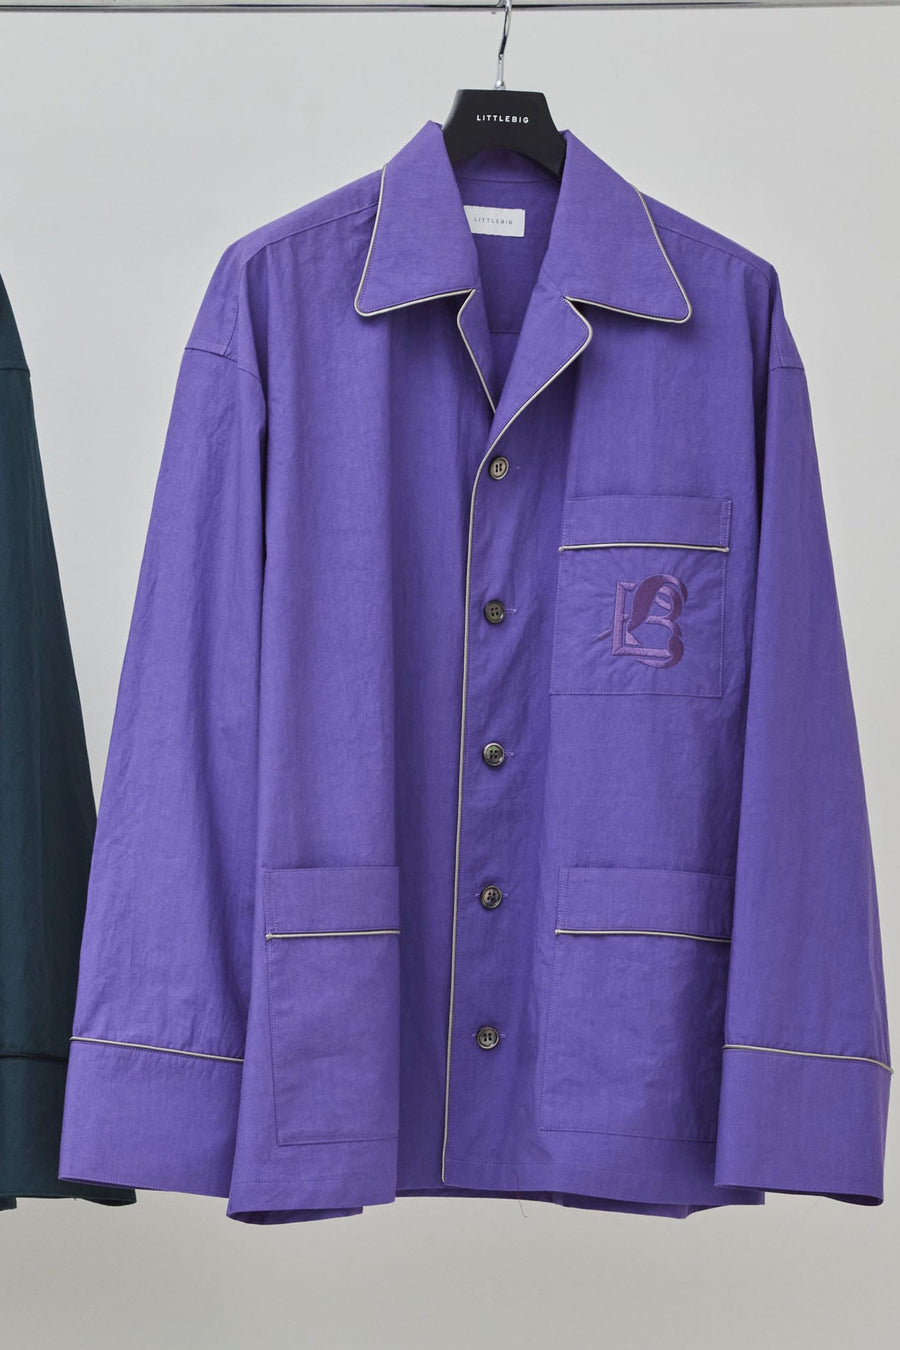 LITTLEBIG  Pajama SH(Purple)